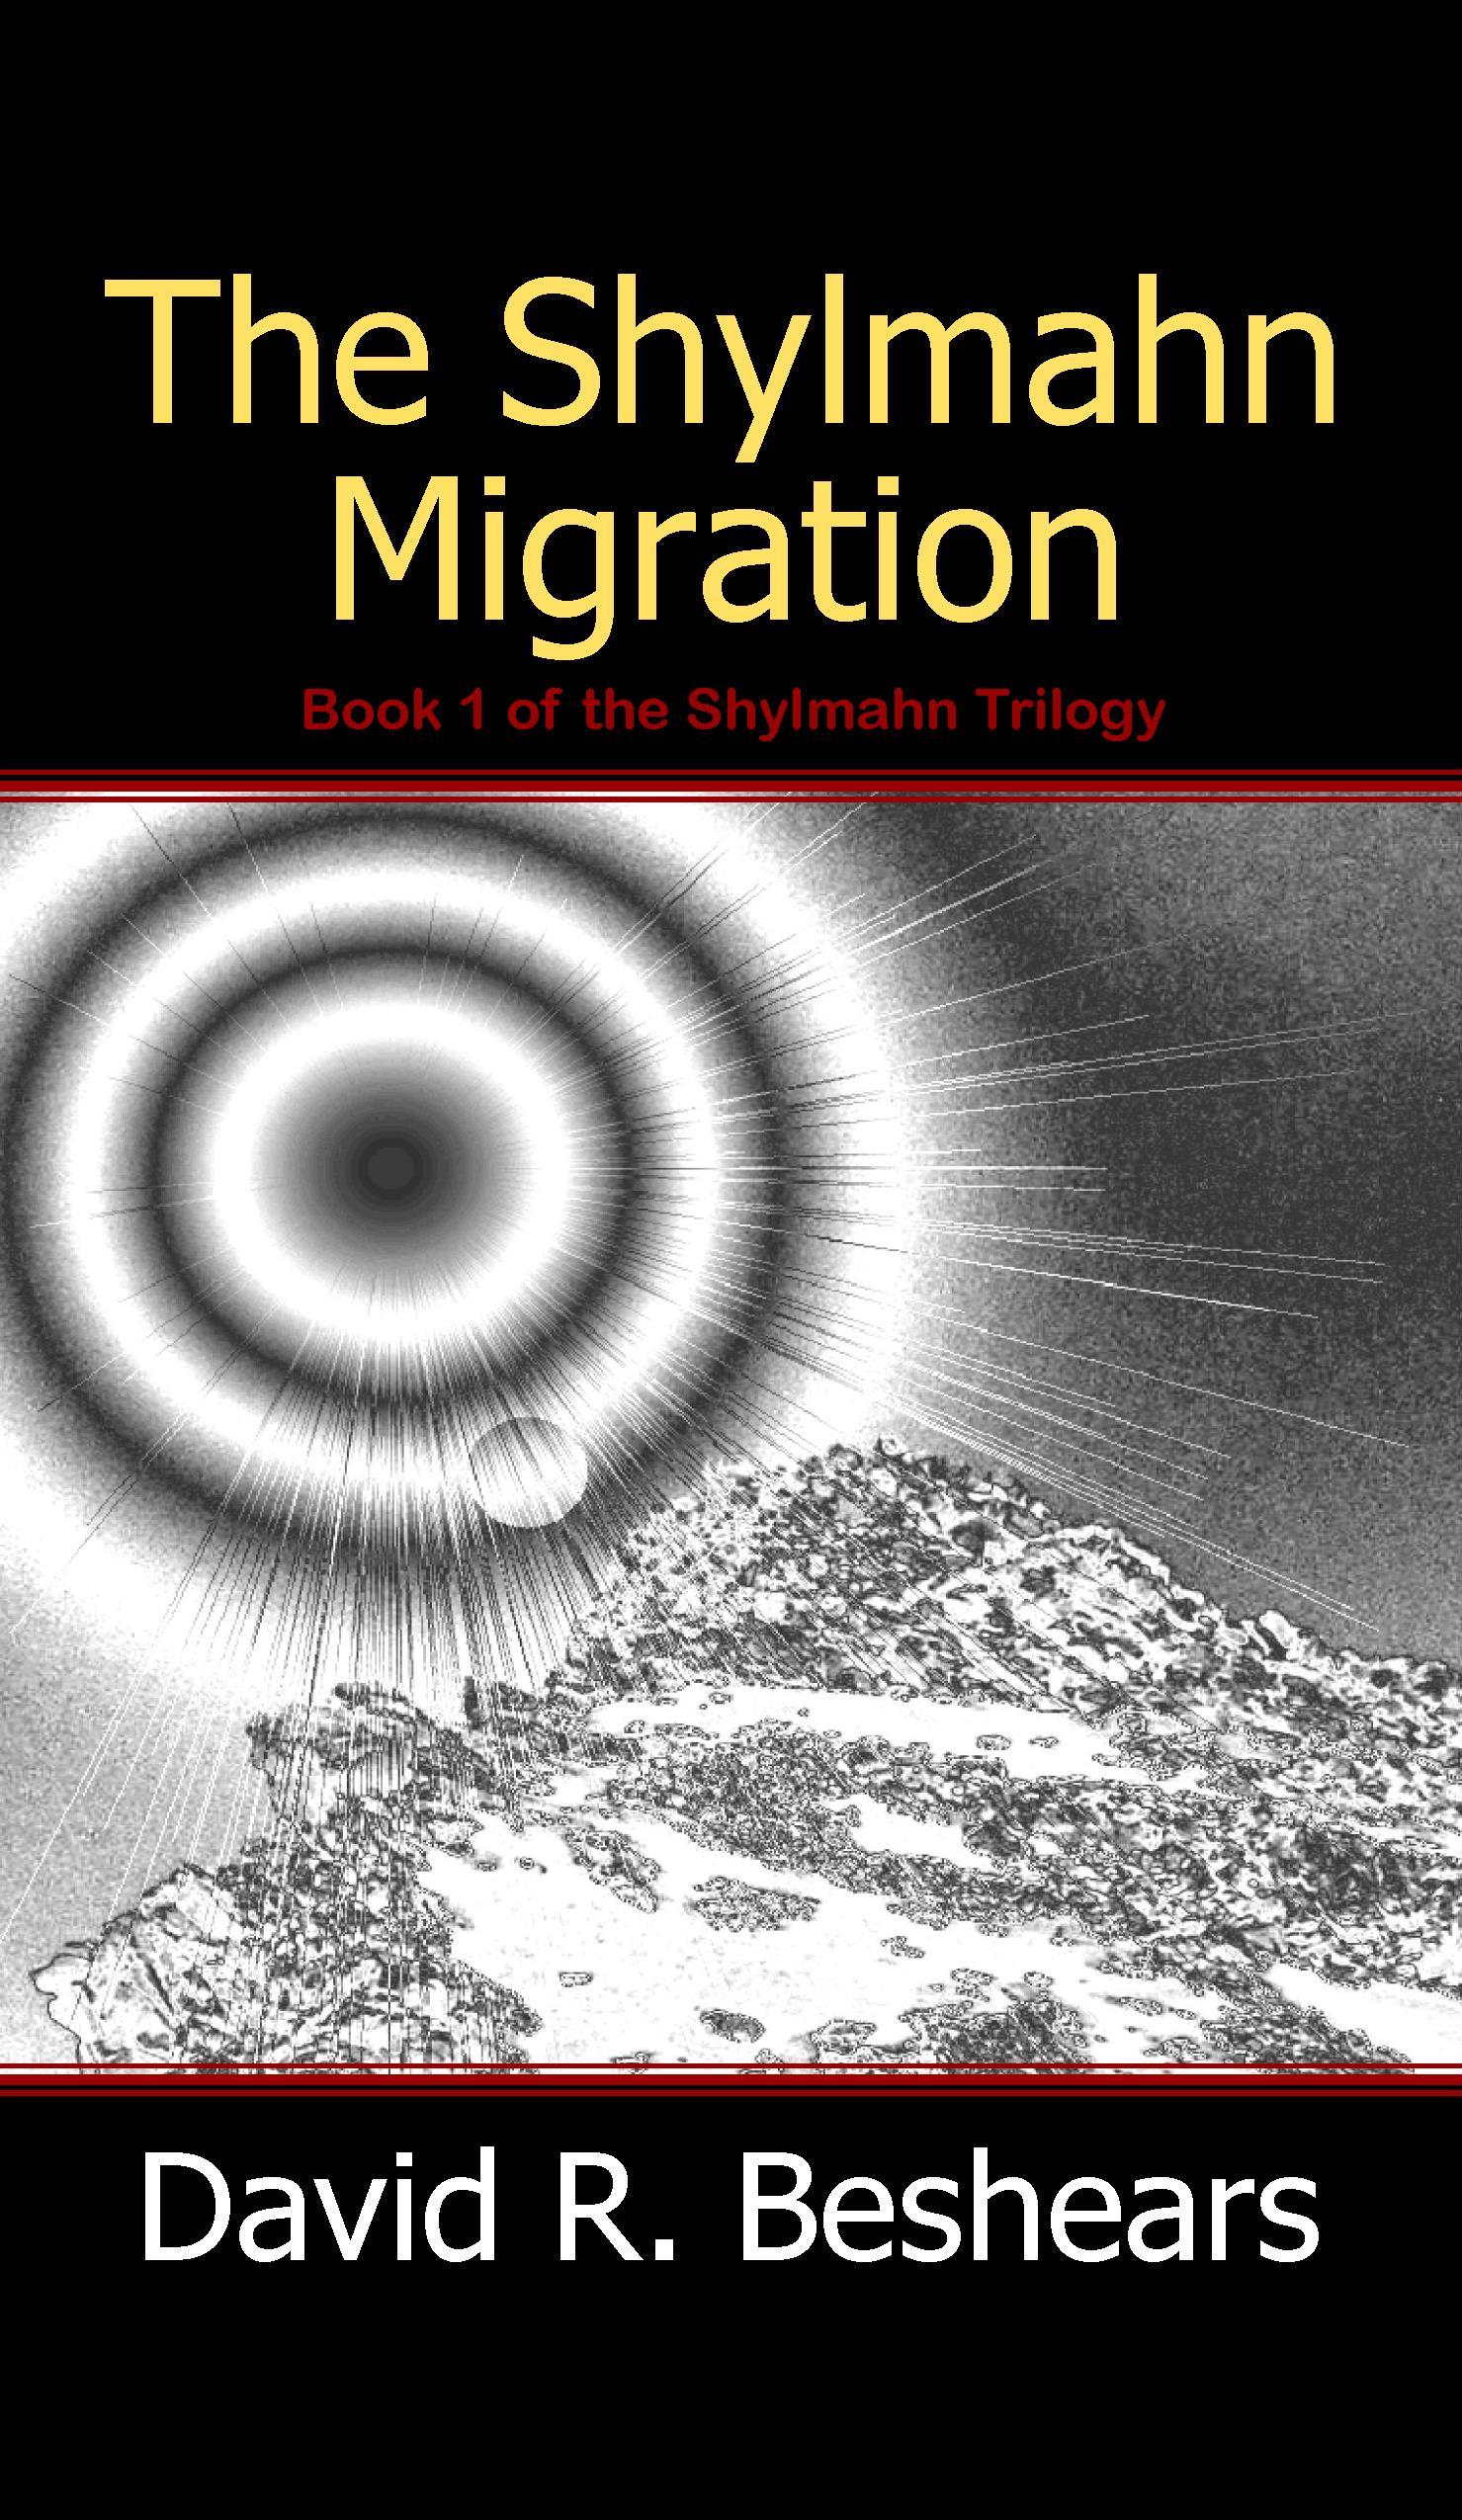 FREE: The Shylmahn Migration by David R. Beshears